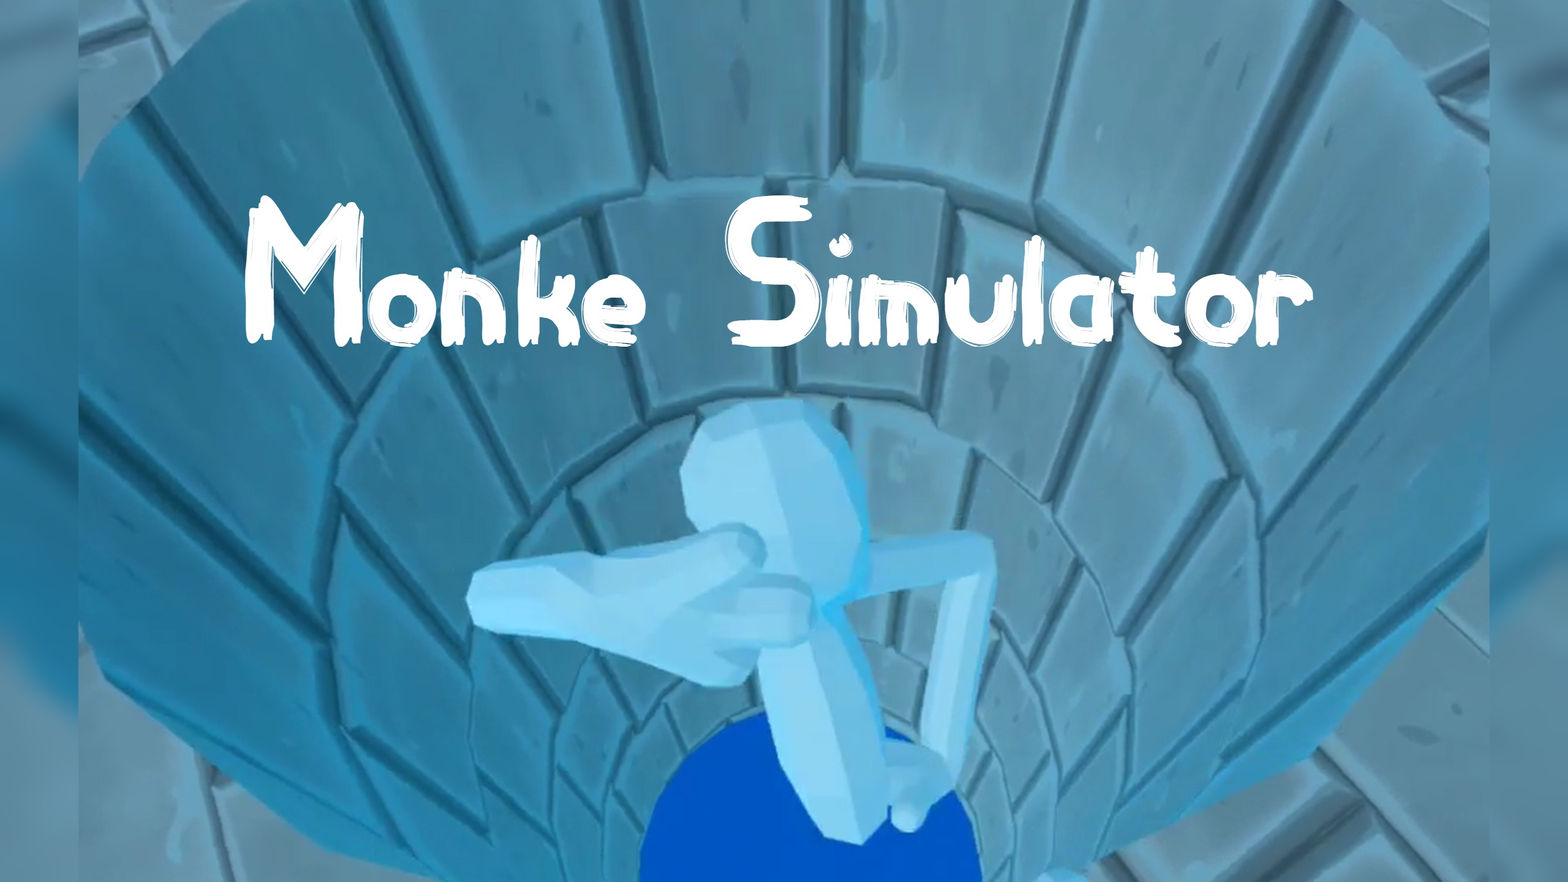 Monke Simulator